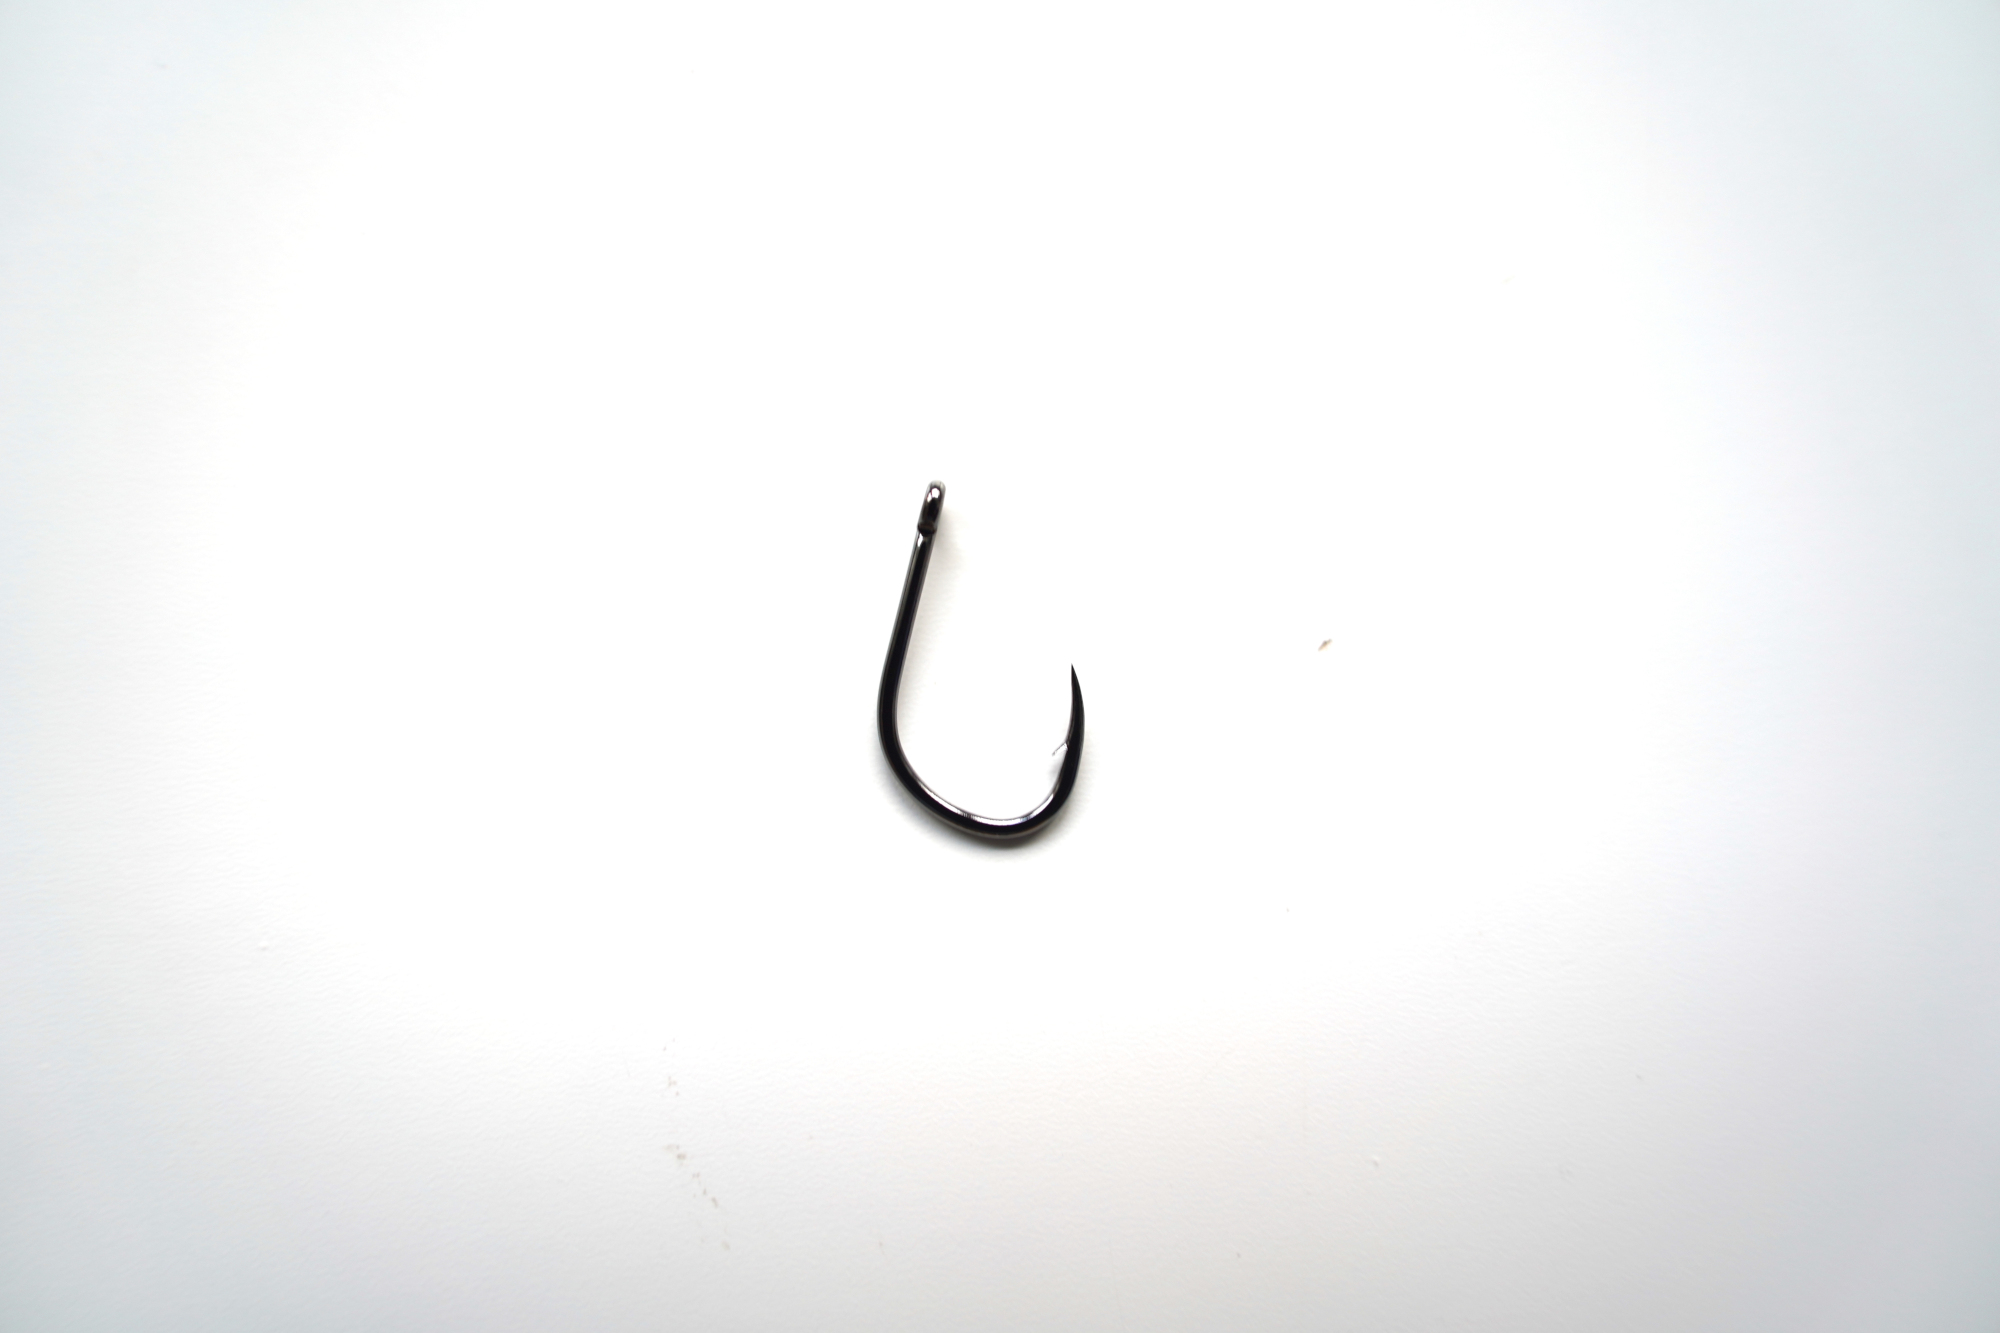 Iseama Ringed Hook Size 4 - The perfect bream hook